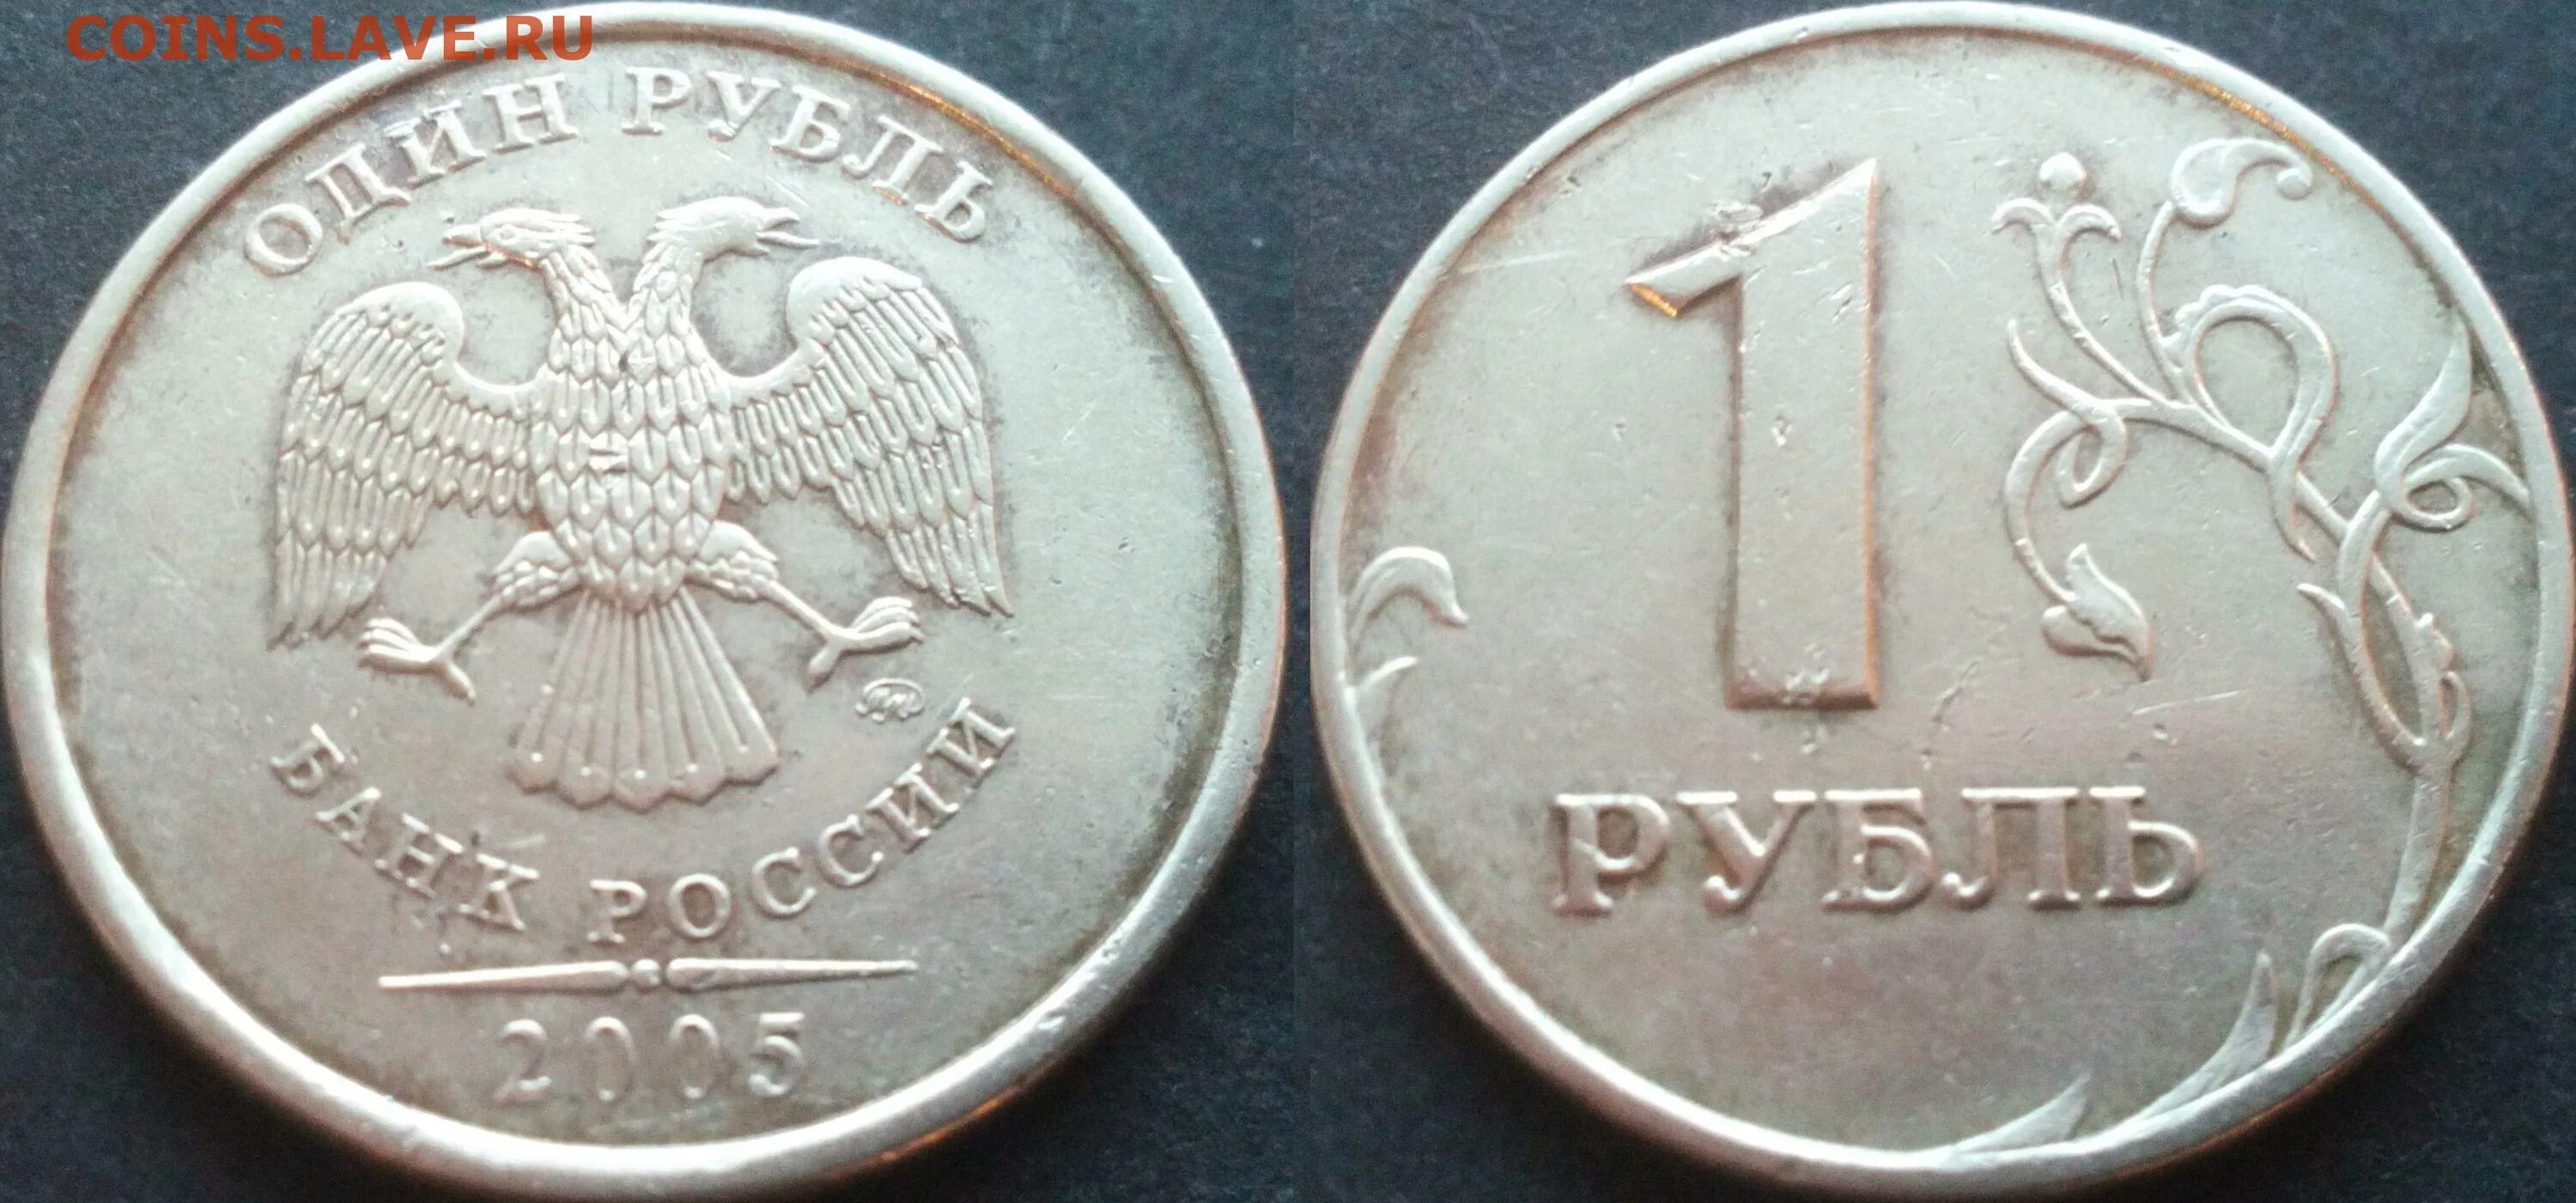 1р. Монеты 1 р 2 р 5 р 10 р. Монета 1 р 1998. Редкие монеты 2 р. 1 Рубль ММД 2005 немагнитная.